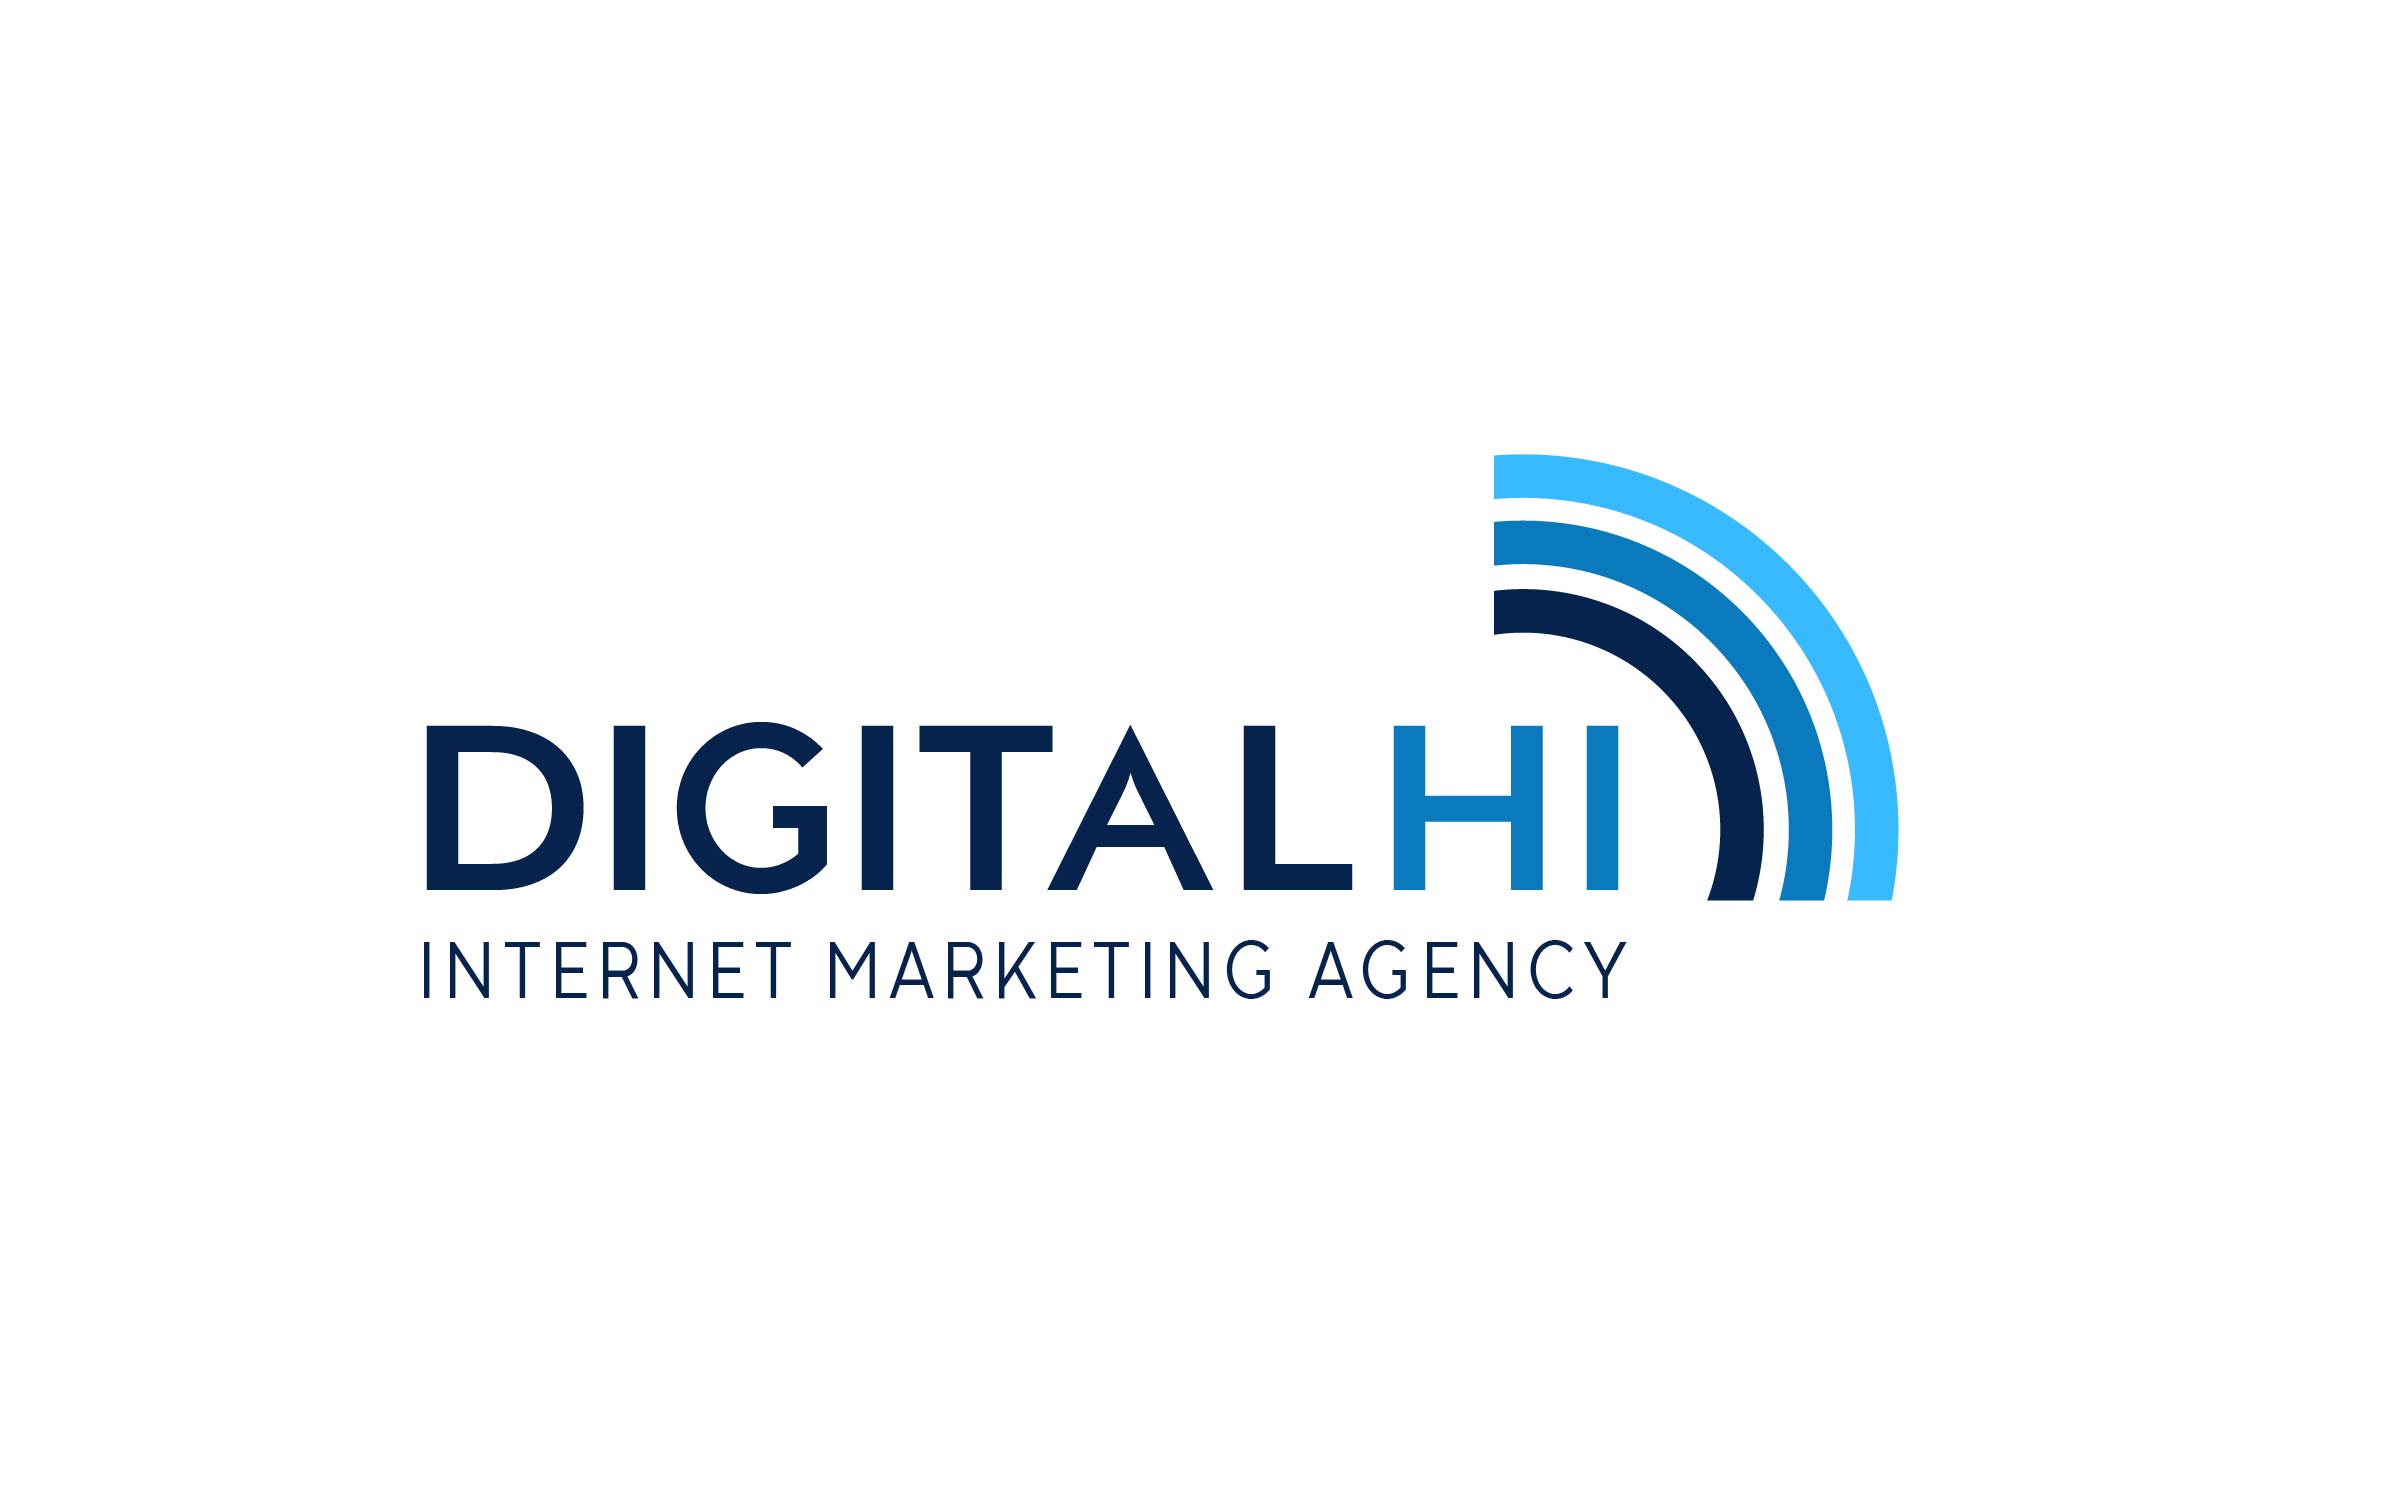 Digital HI Marketing